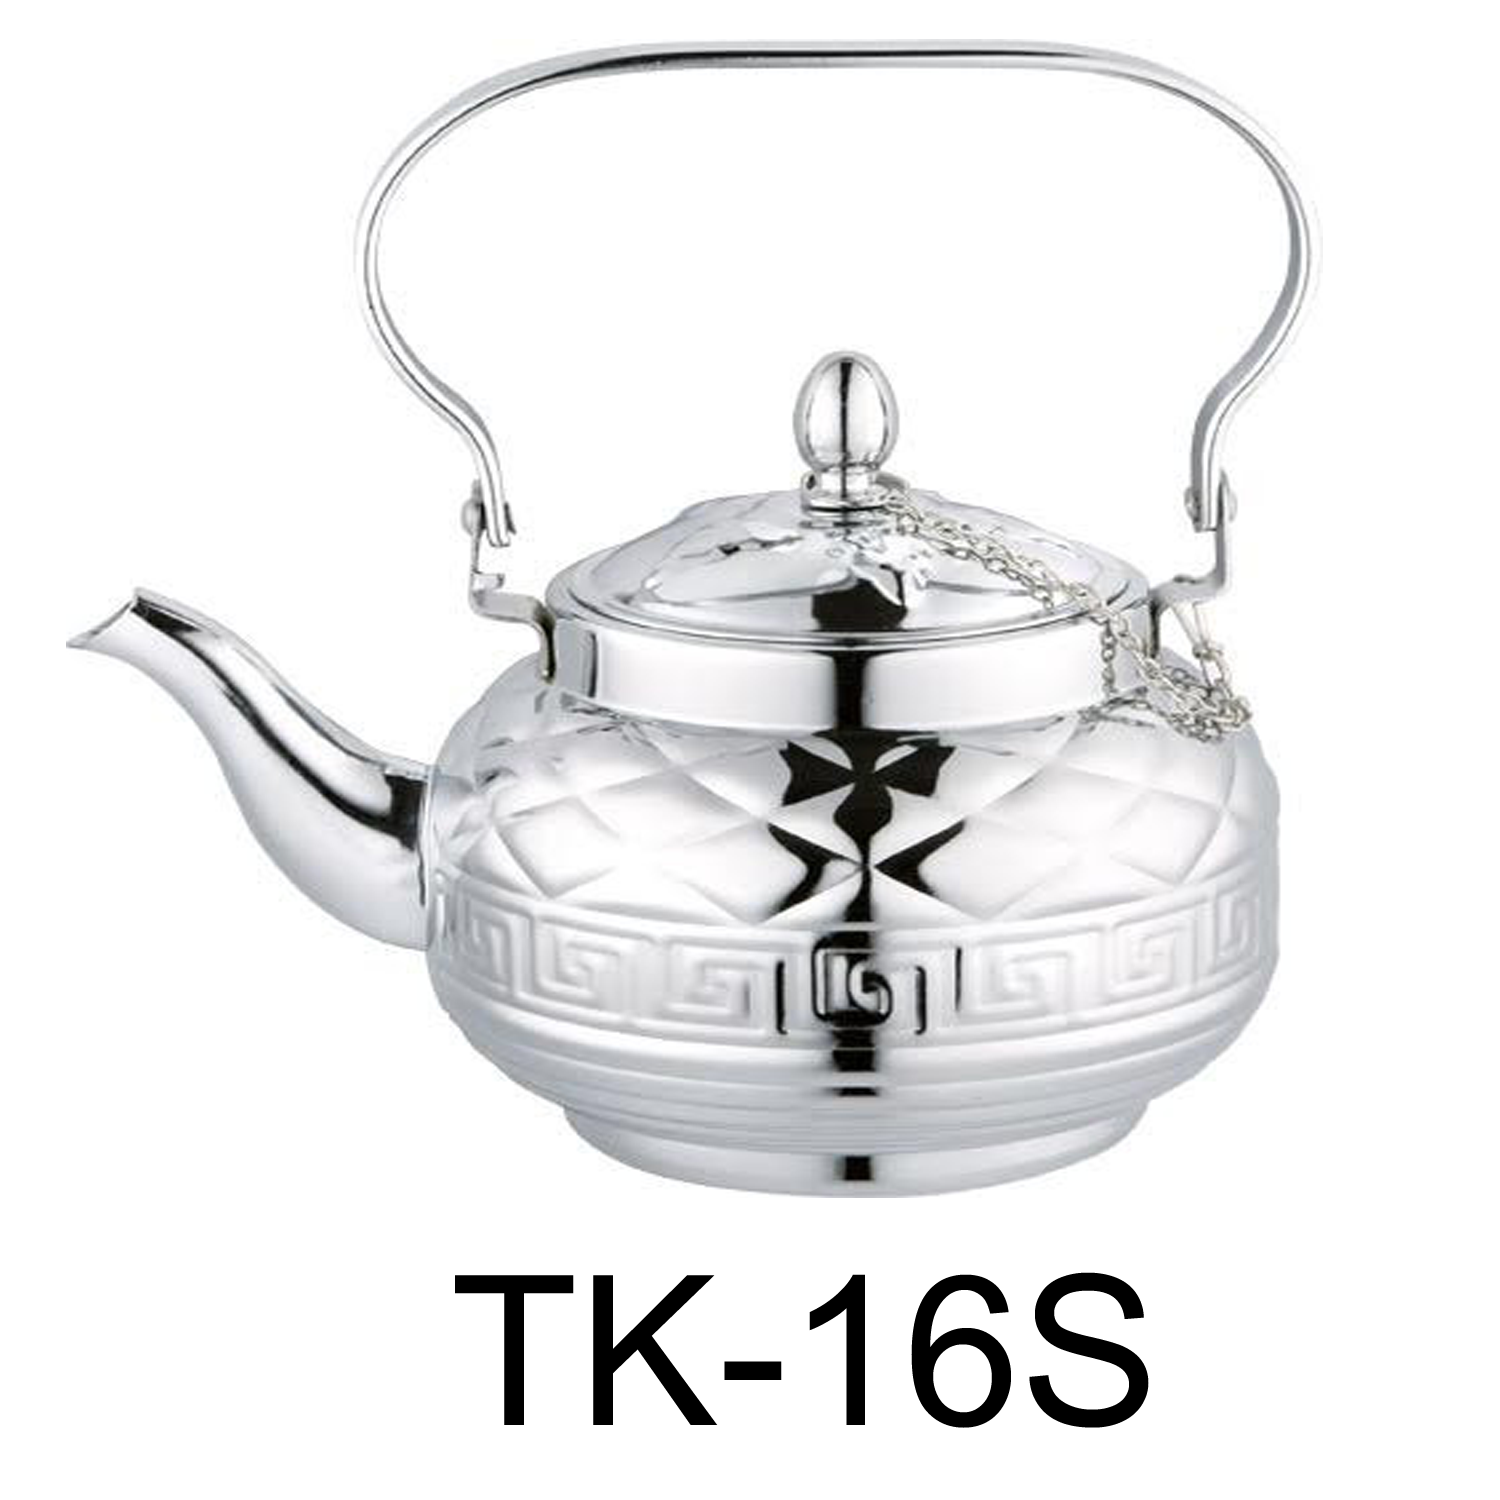 Knapp Monarch Stainless Steel Tea Kettle